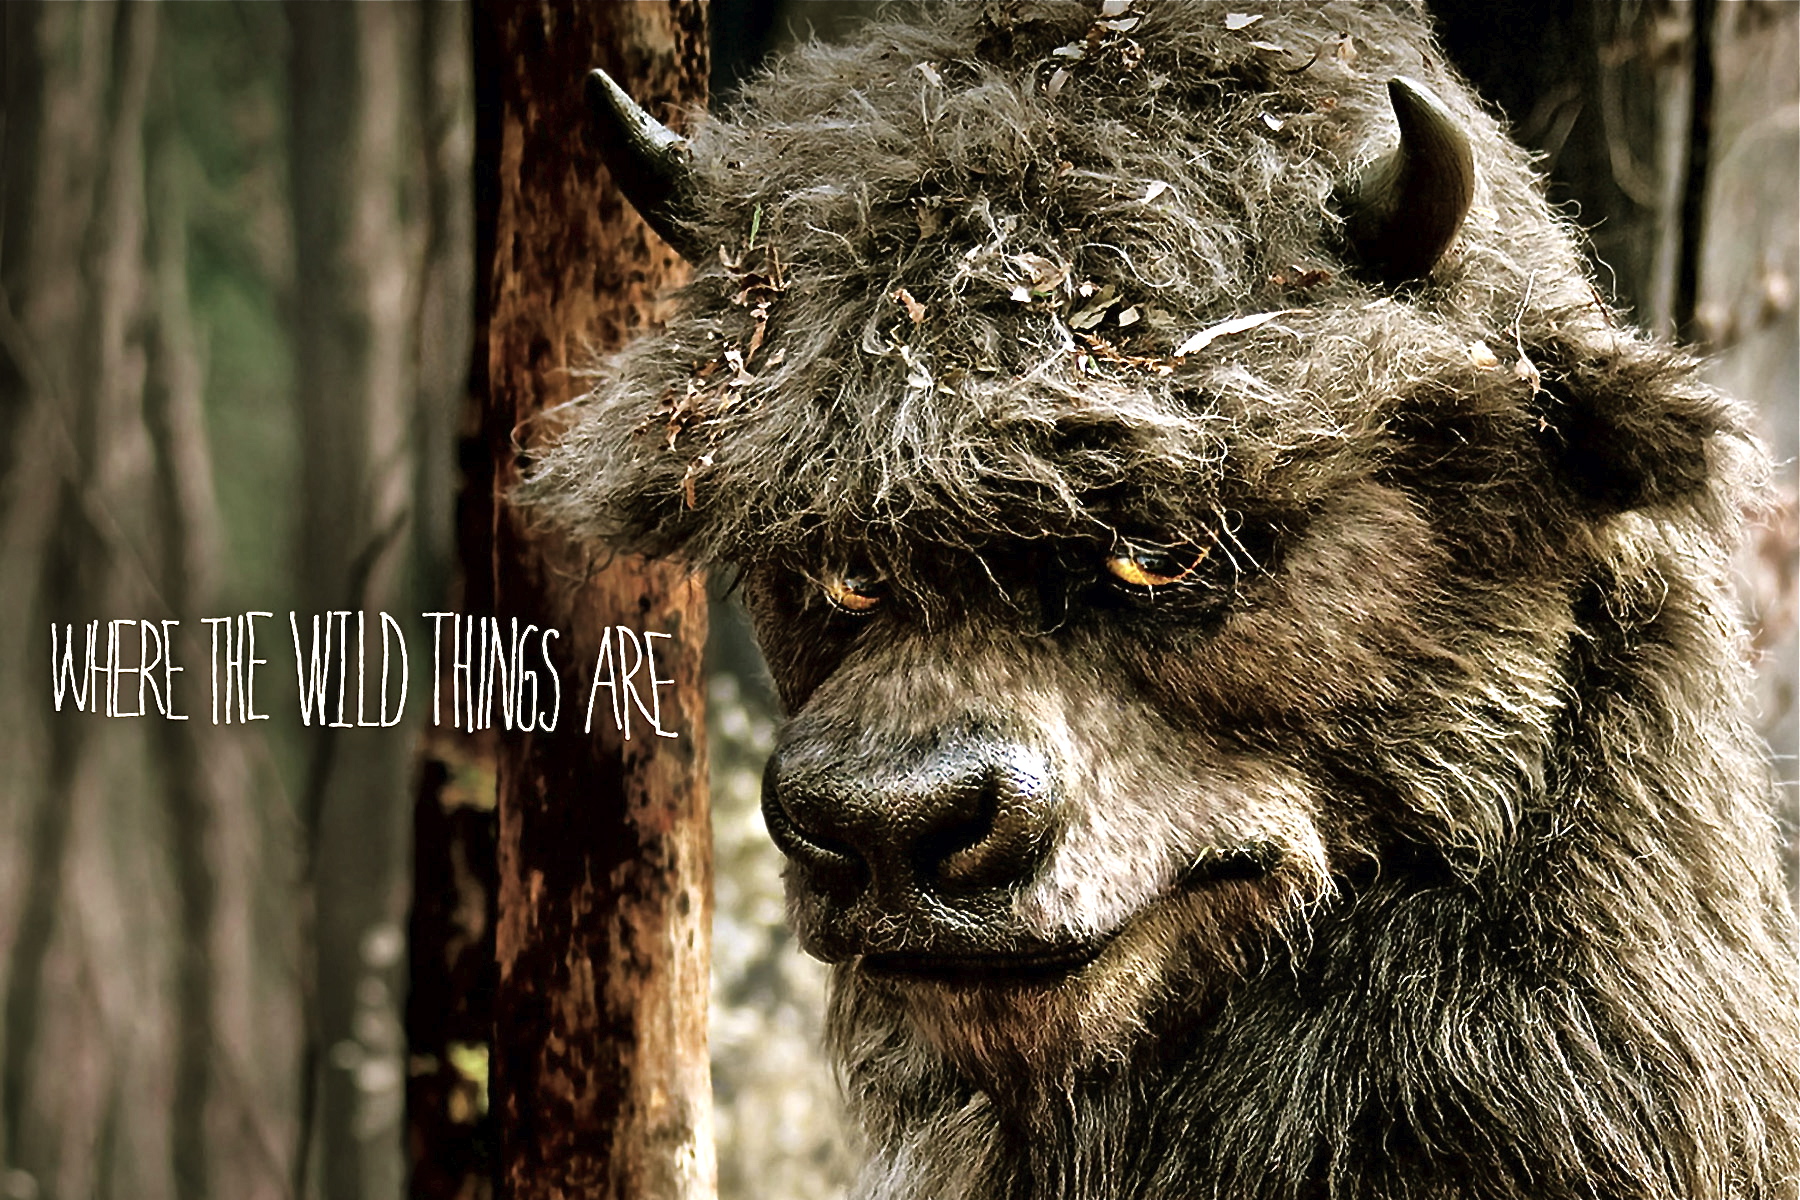 Daniel, The Bull - Where The Wild Things Are - Jim Henson Studios - Spike Jonze, Director - Warner Bros